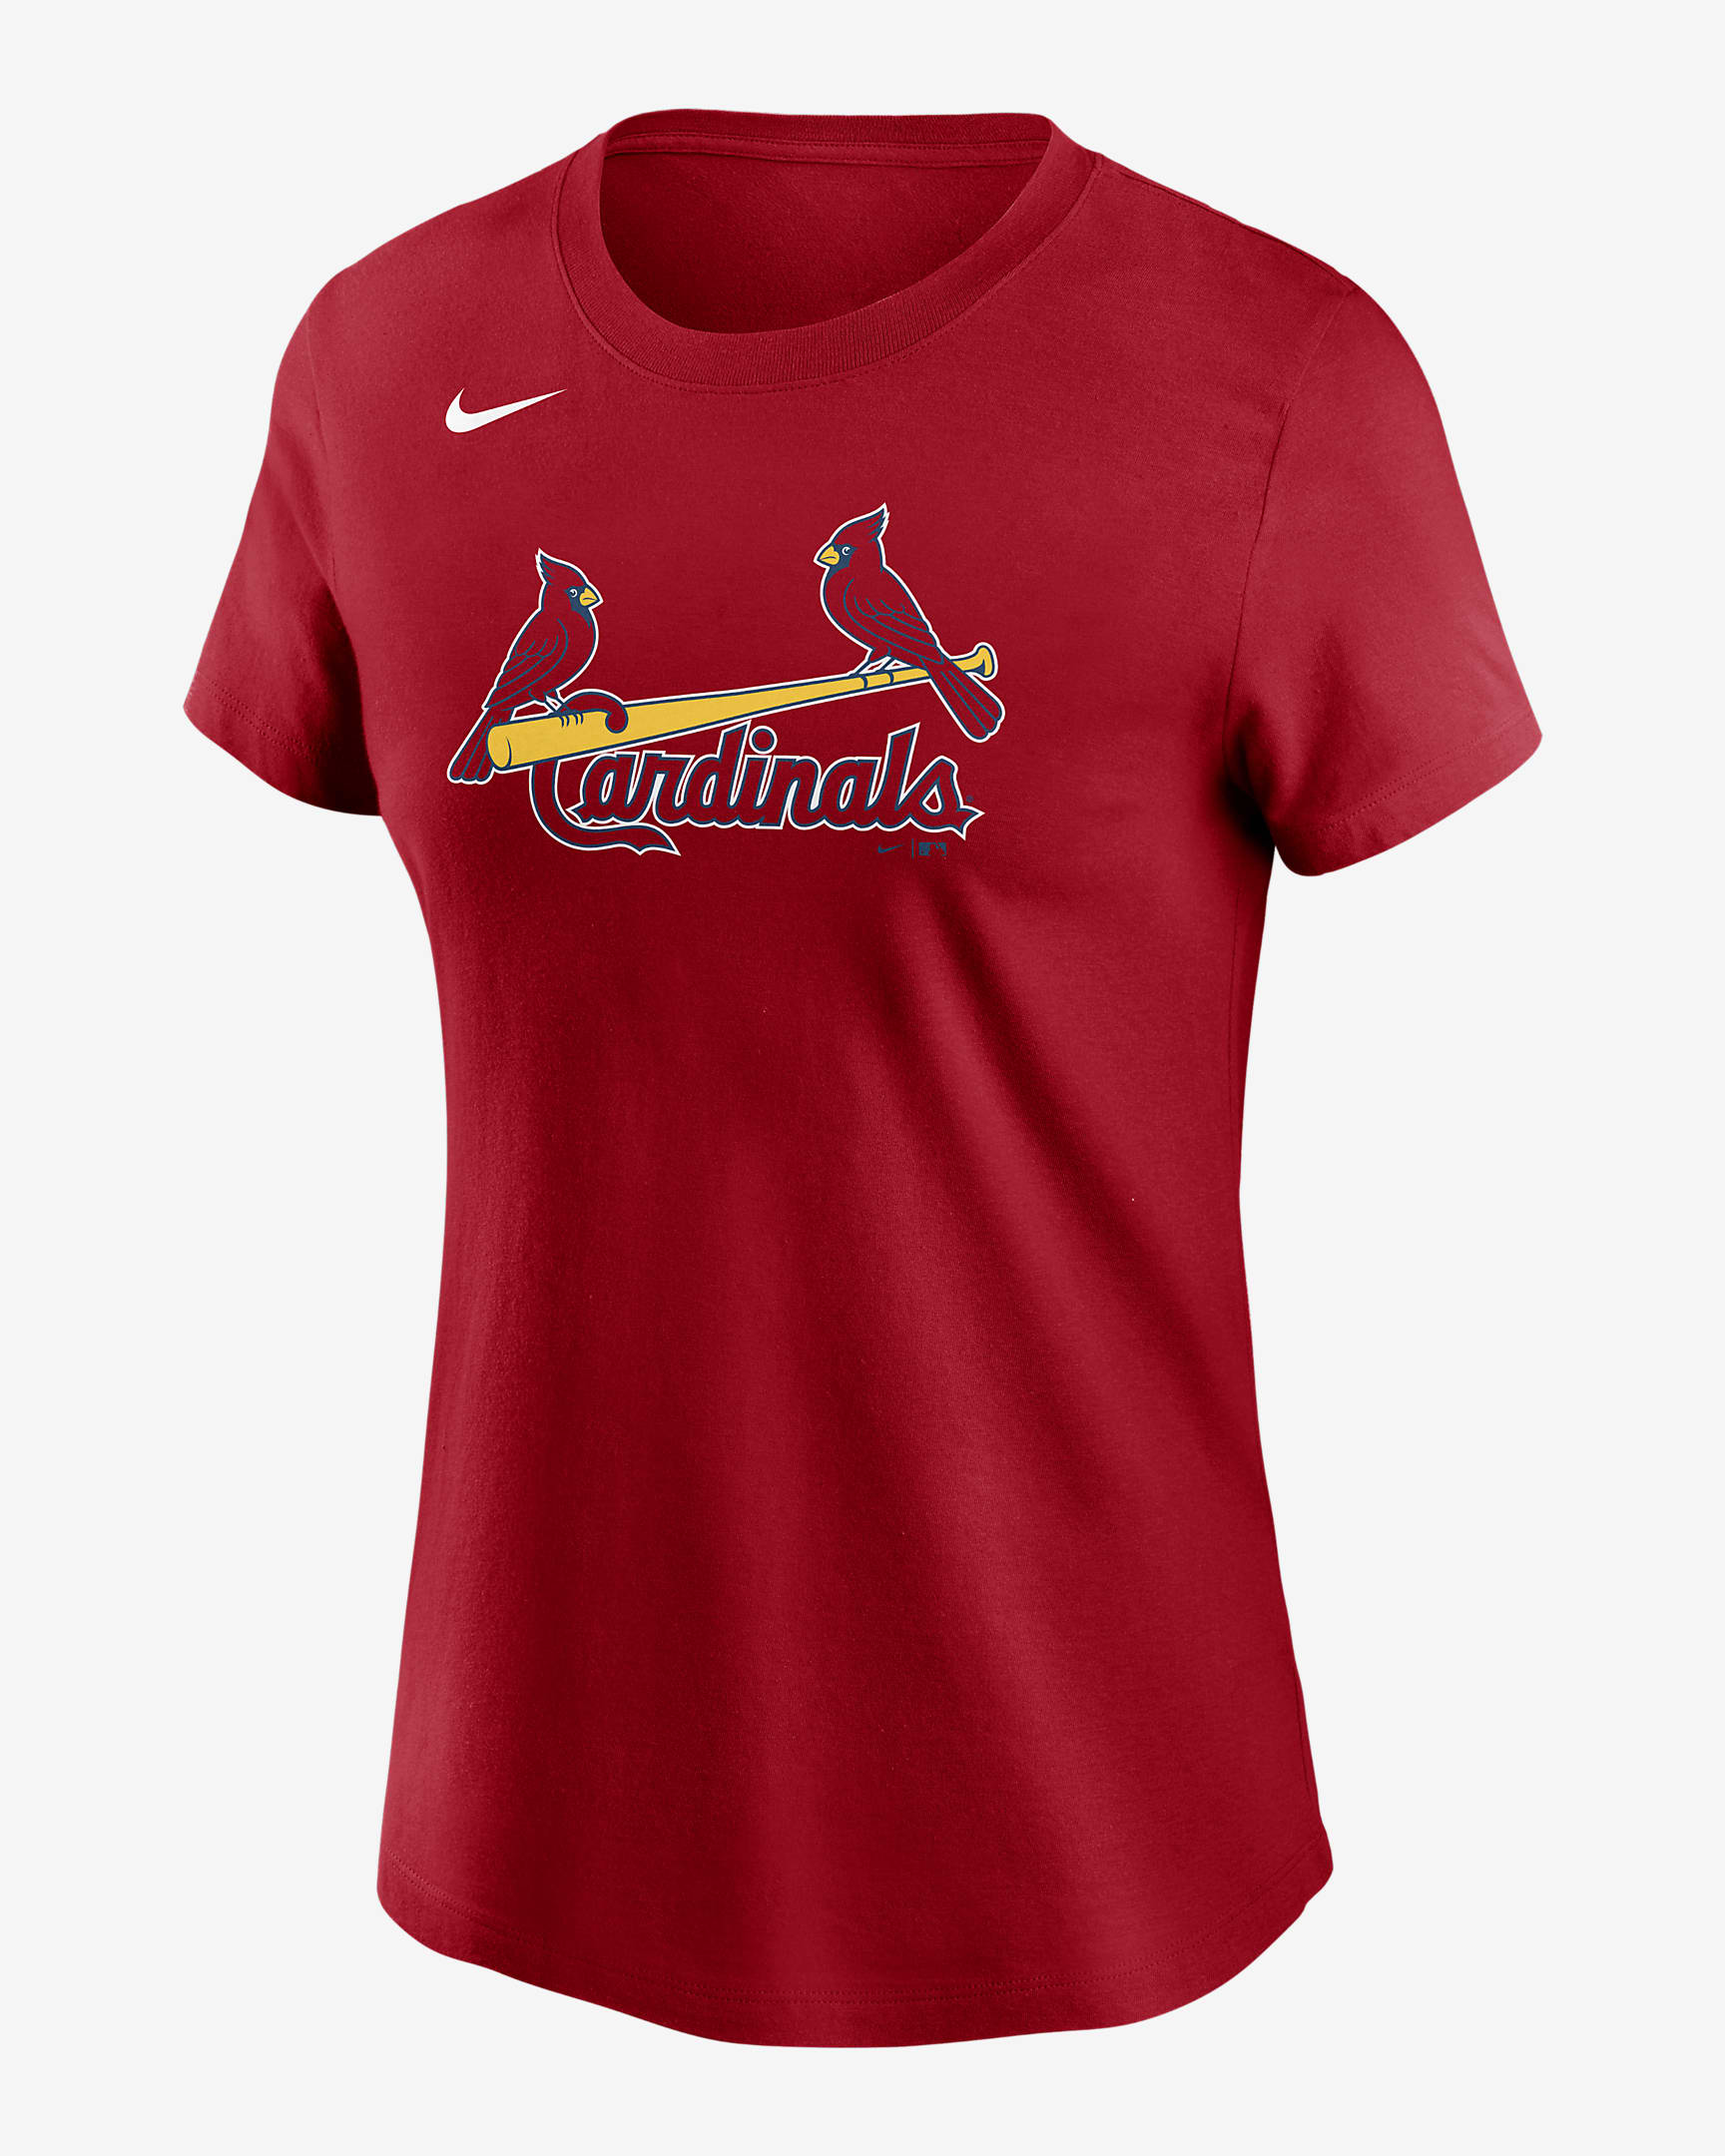 MLB St. Louis Cardinals (Yadier Molina) Women's T-Shirt. Nike.com